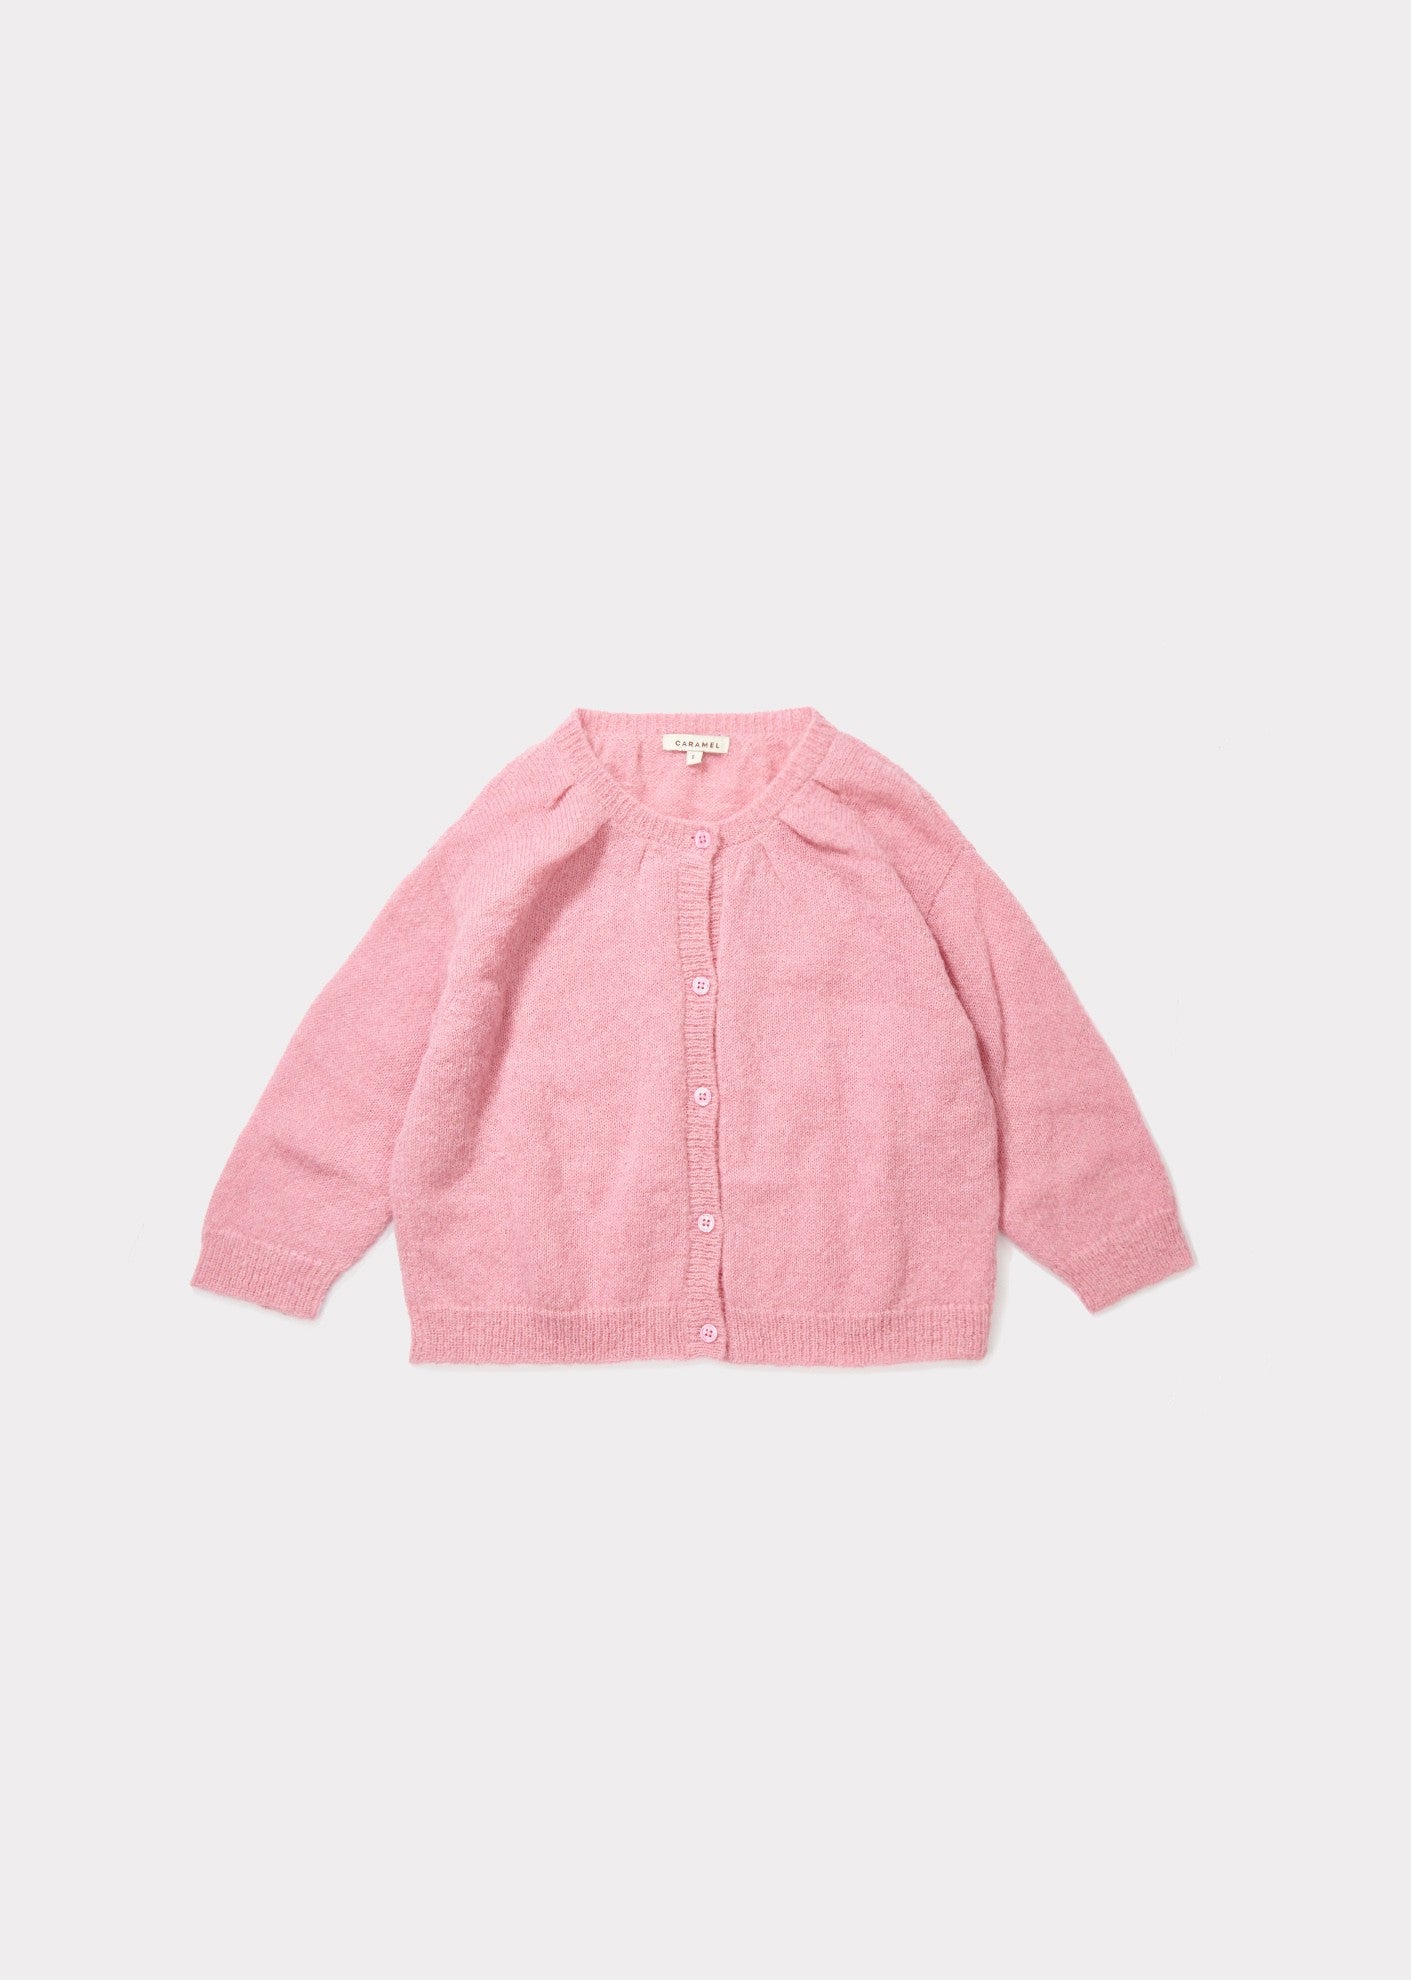 Girls Pink Knitted Cardigan